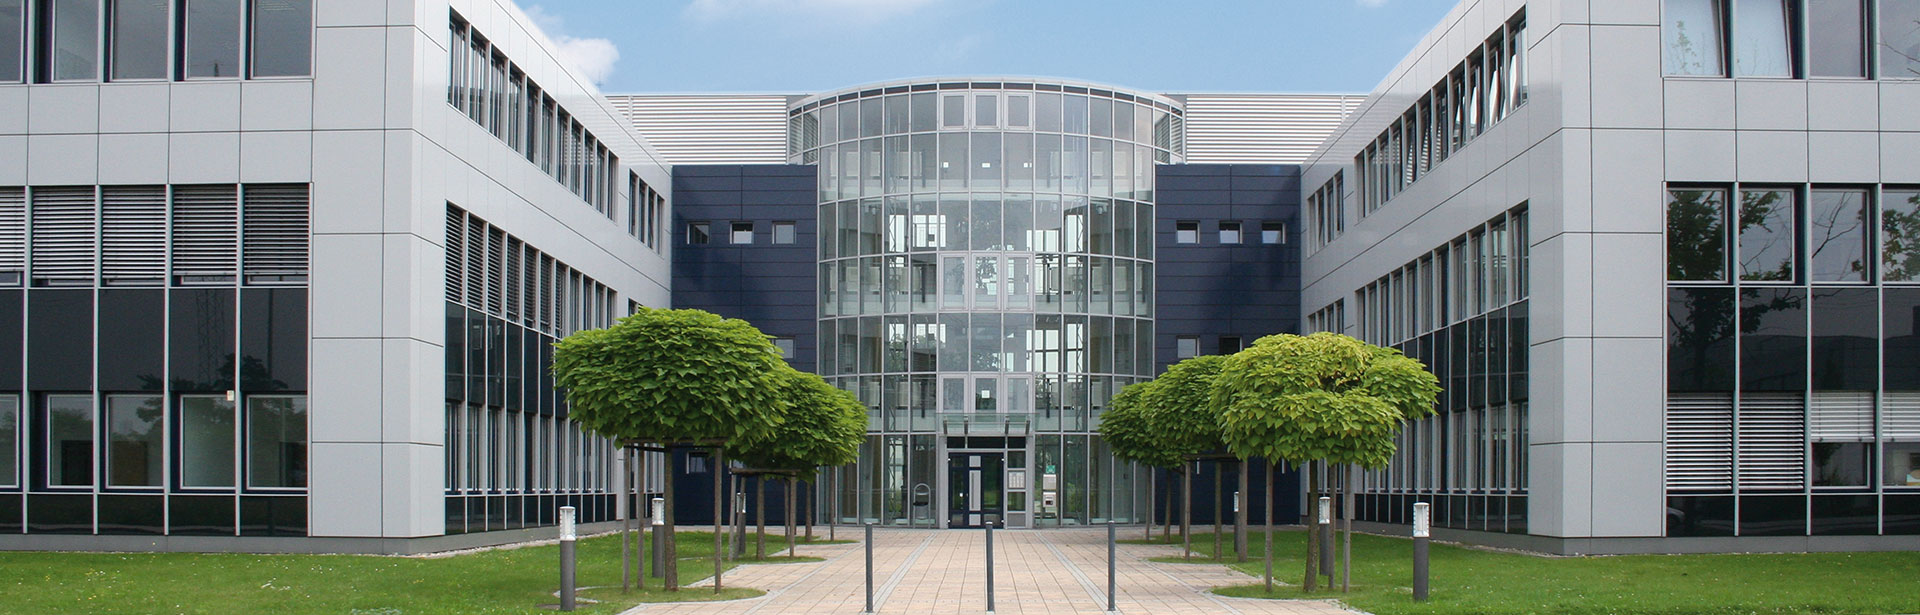 Exterior facade of the new office building in Leverkusen